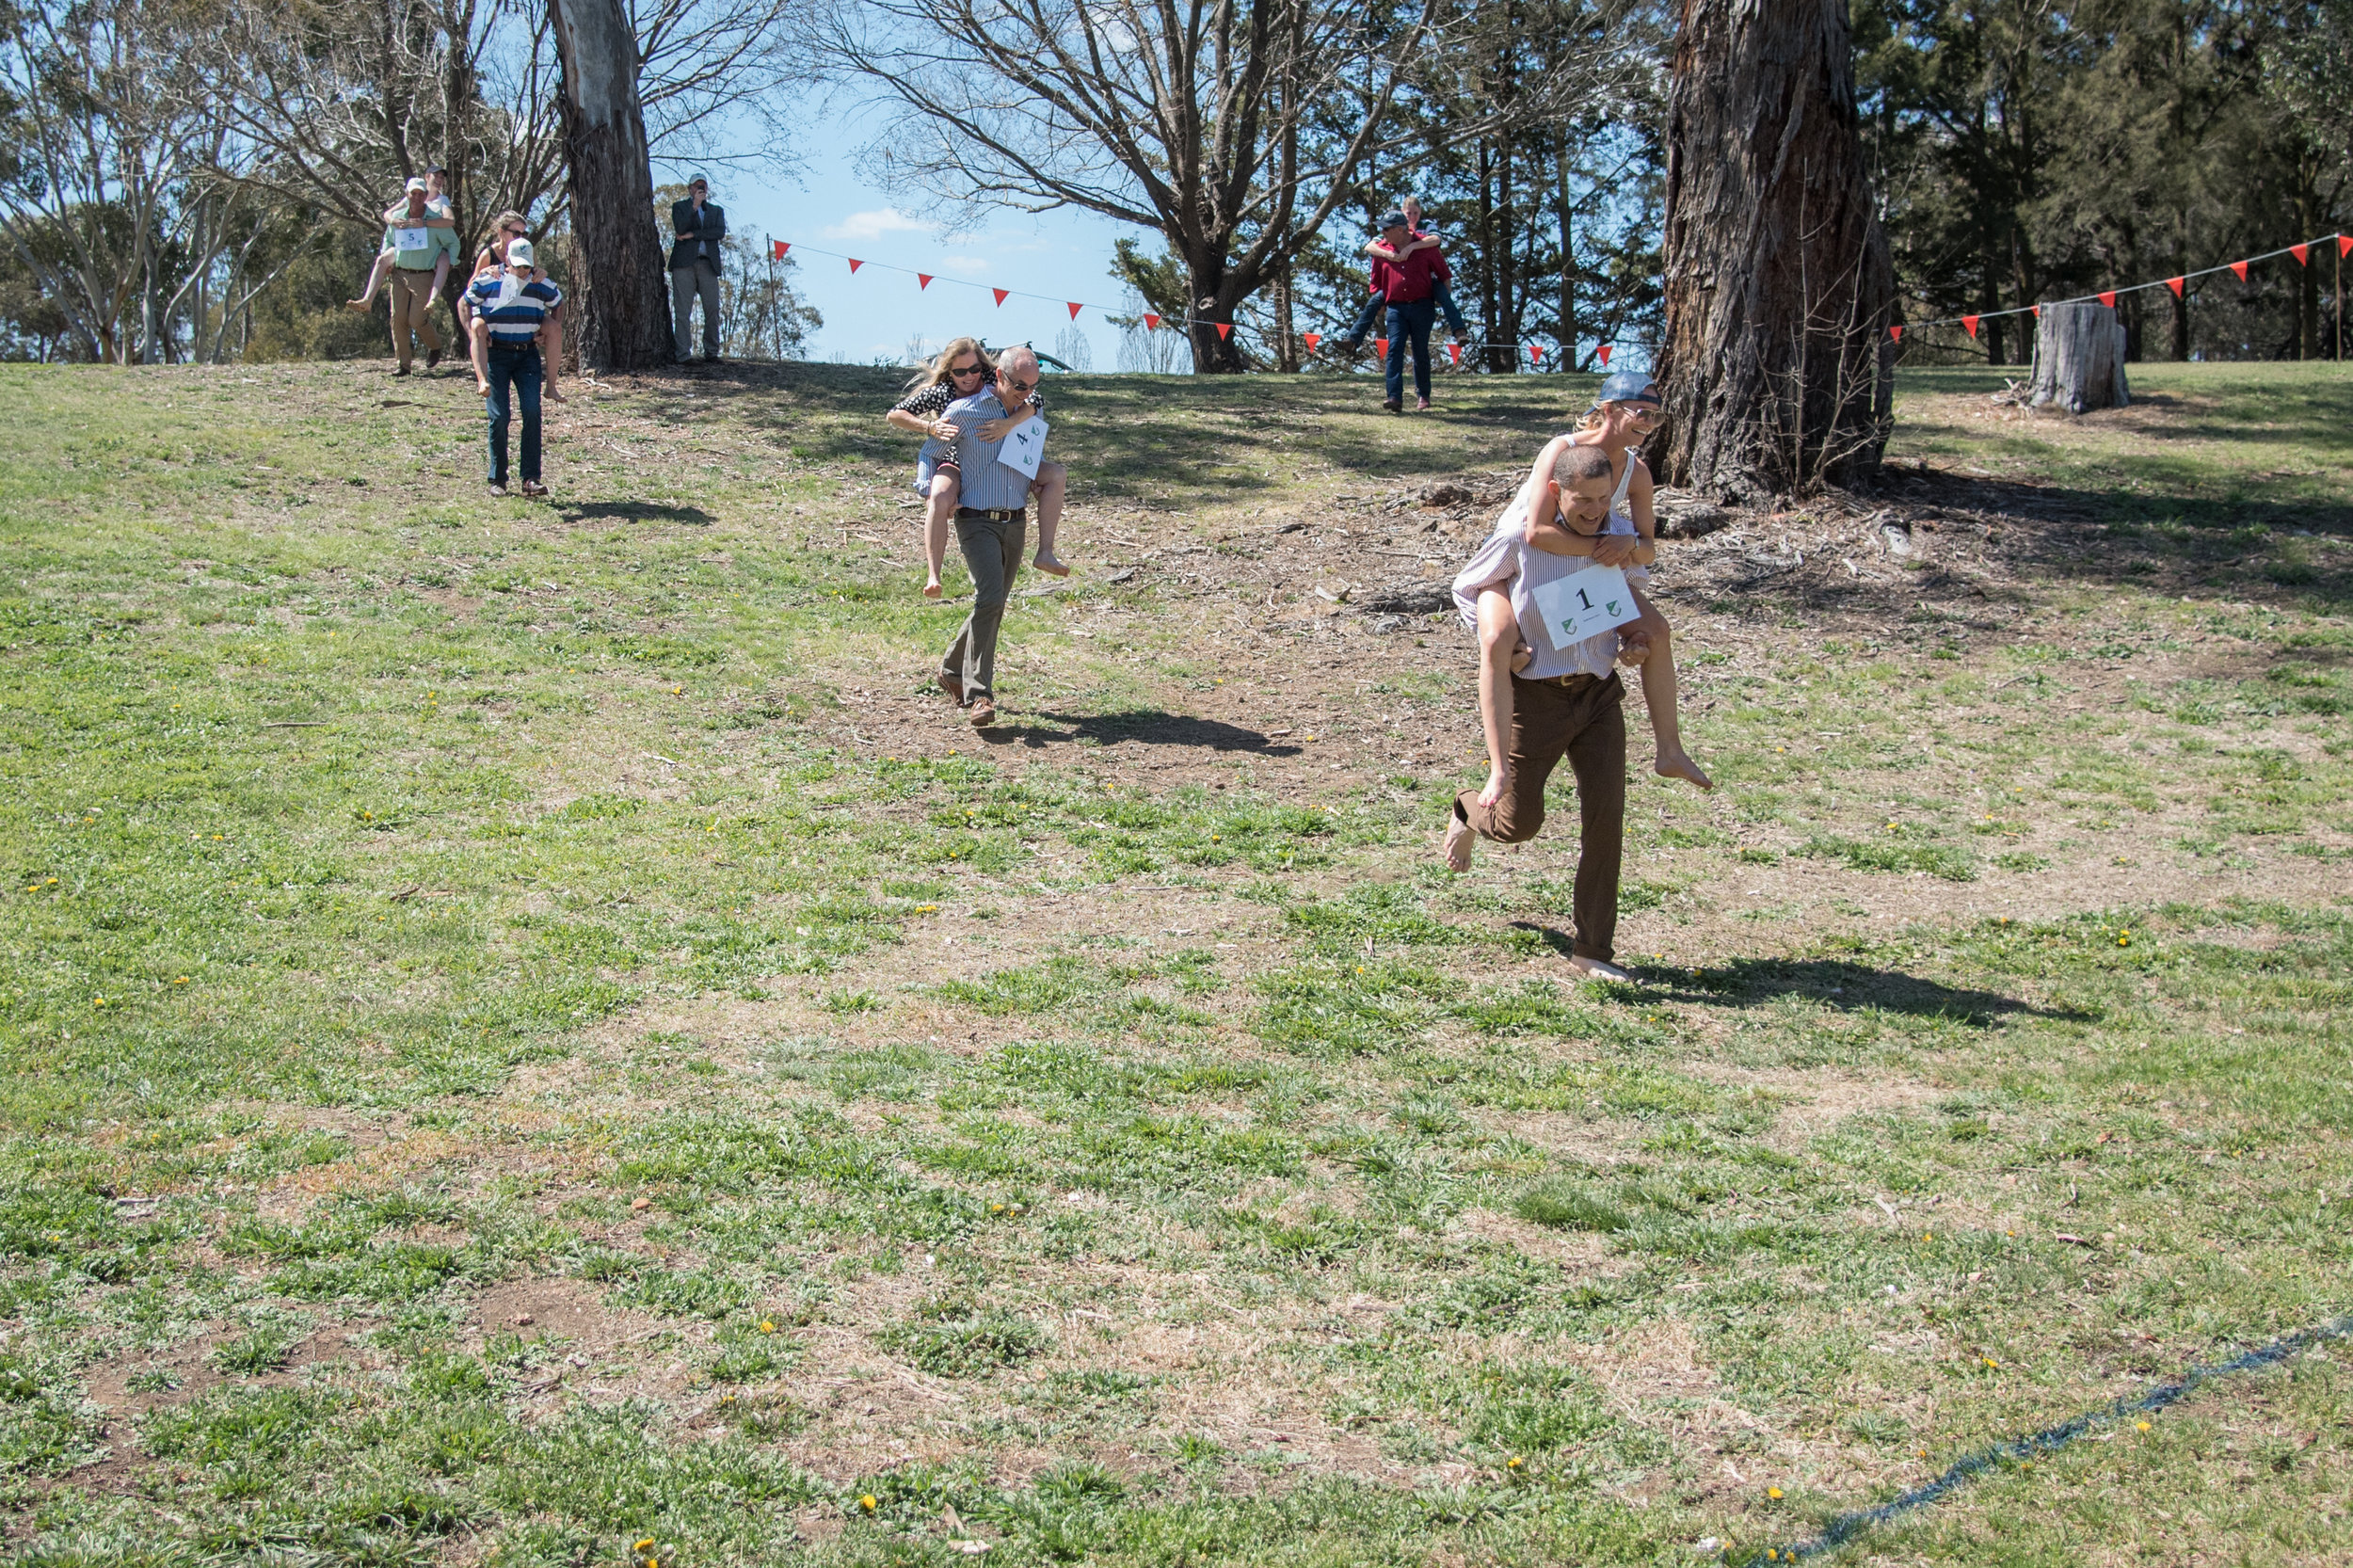  Alumni-Student piggyback teams racing toward finish line in the 2015 Robb Races    